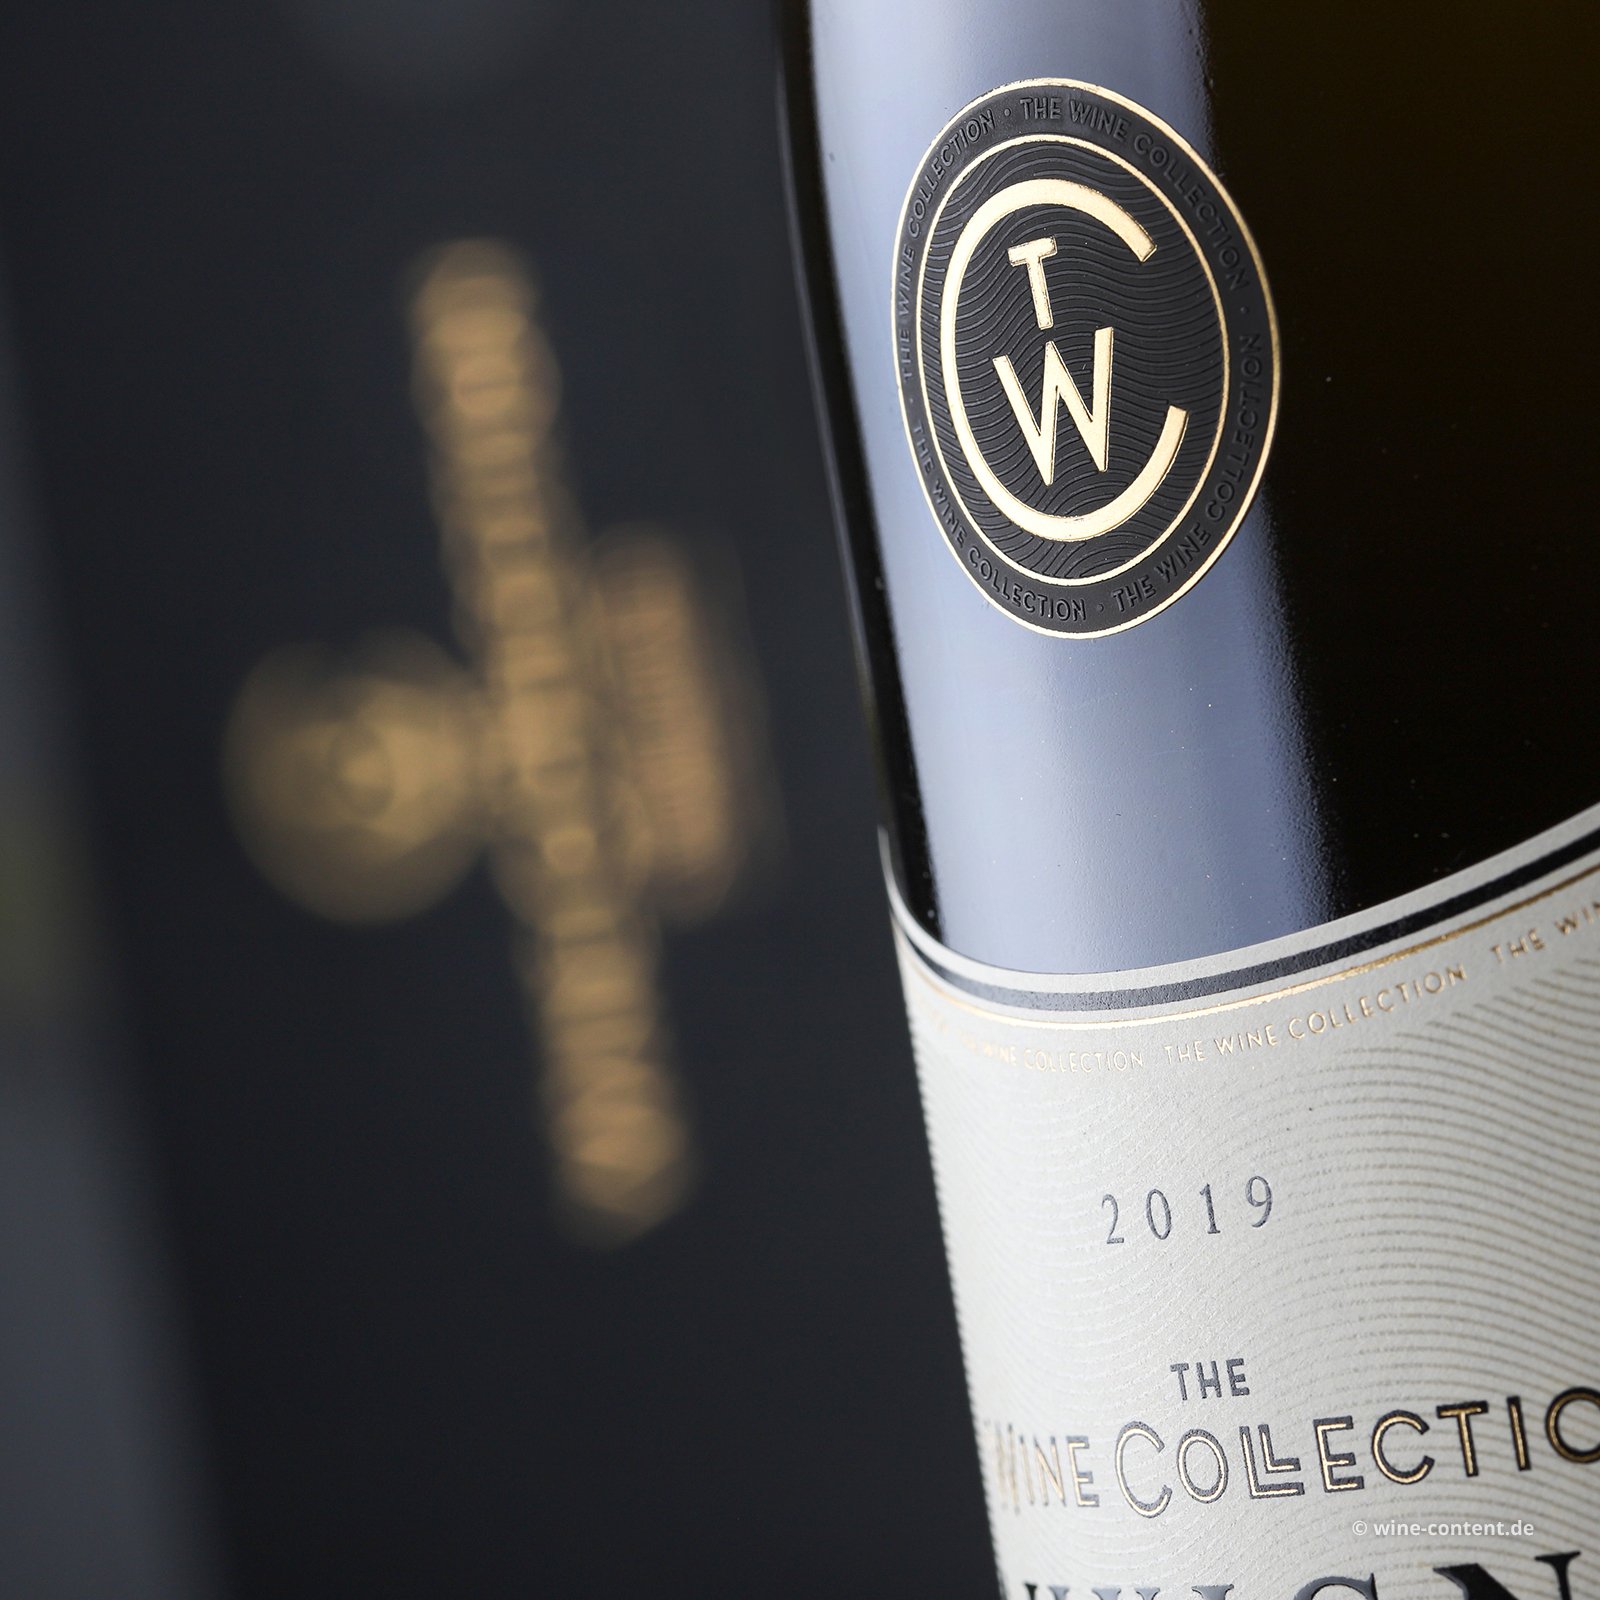 Sauvignon Blanc 2019 Wine Collection